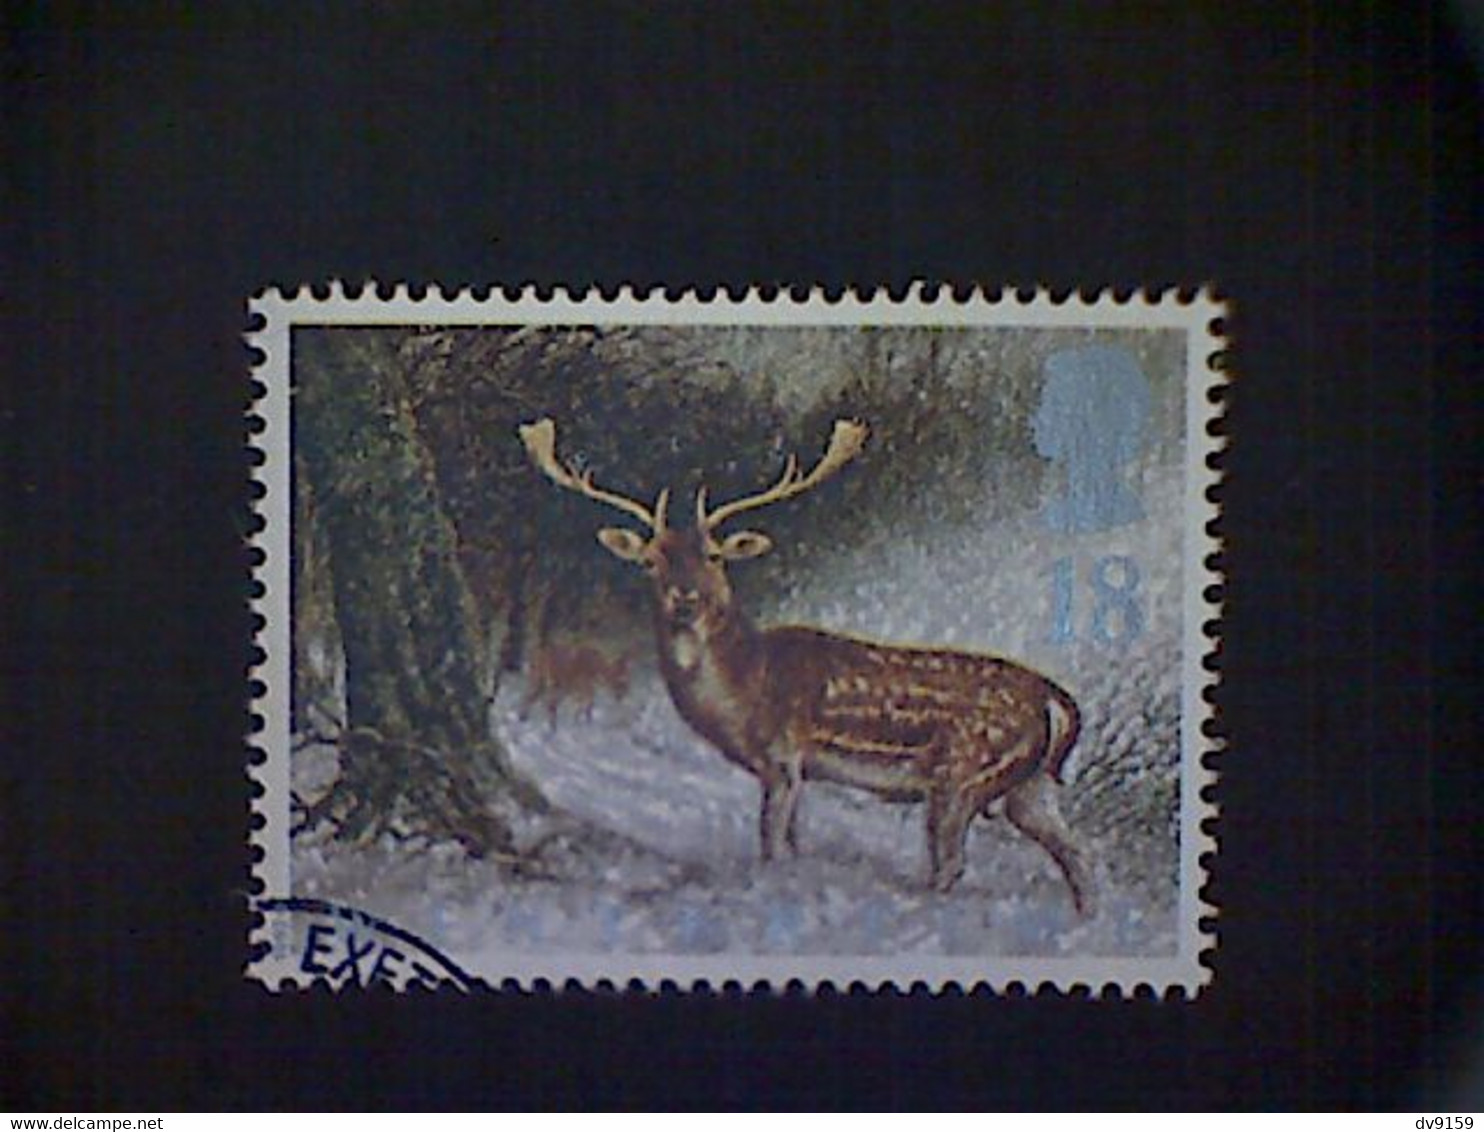 Great Britain, Scott #1421, Used (o), 1992, Animals In Winter, Fallow Deer, 18p - Unclassified